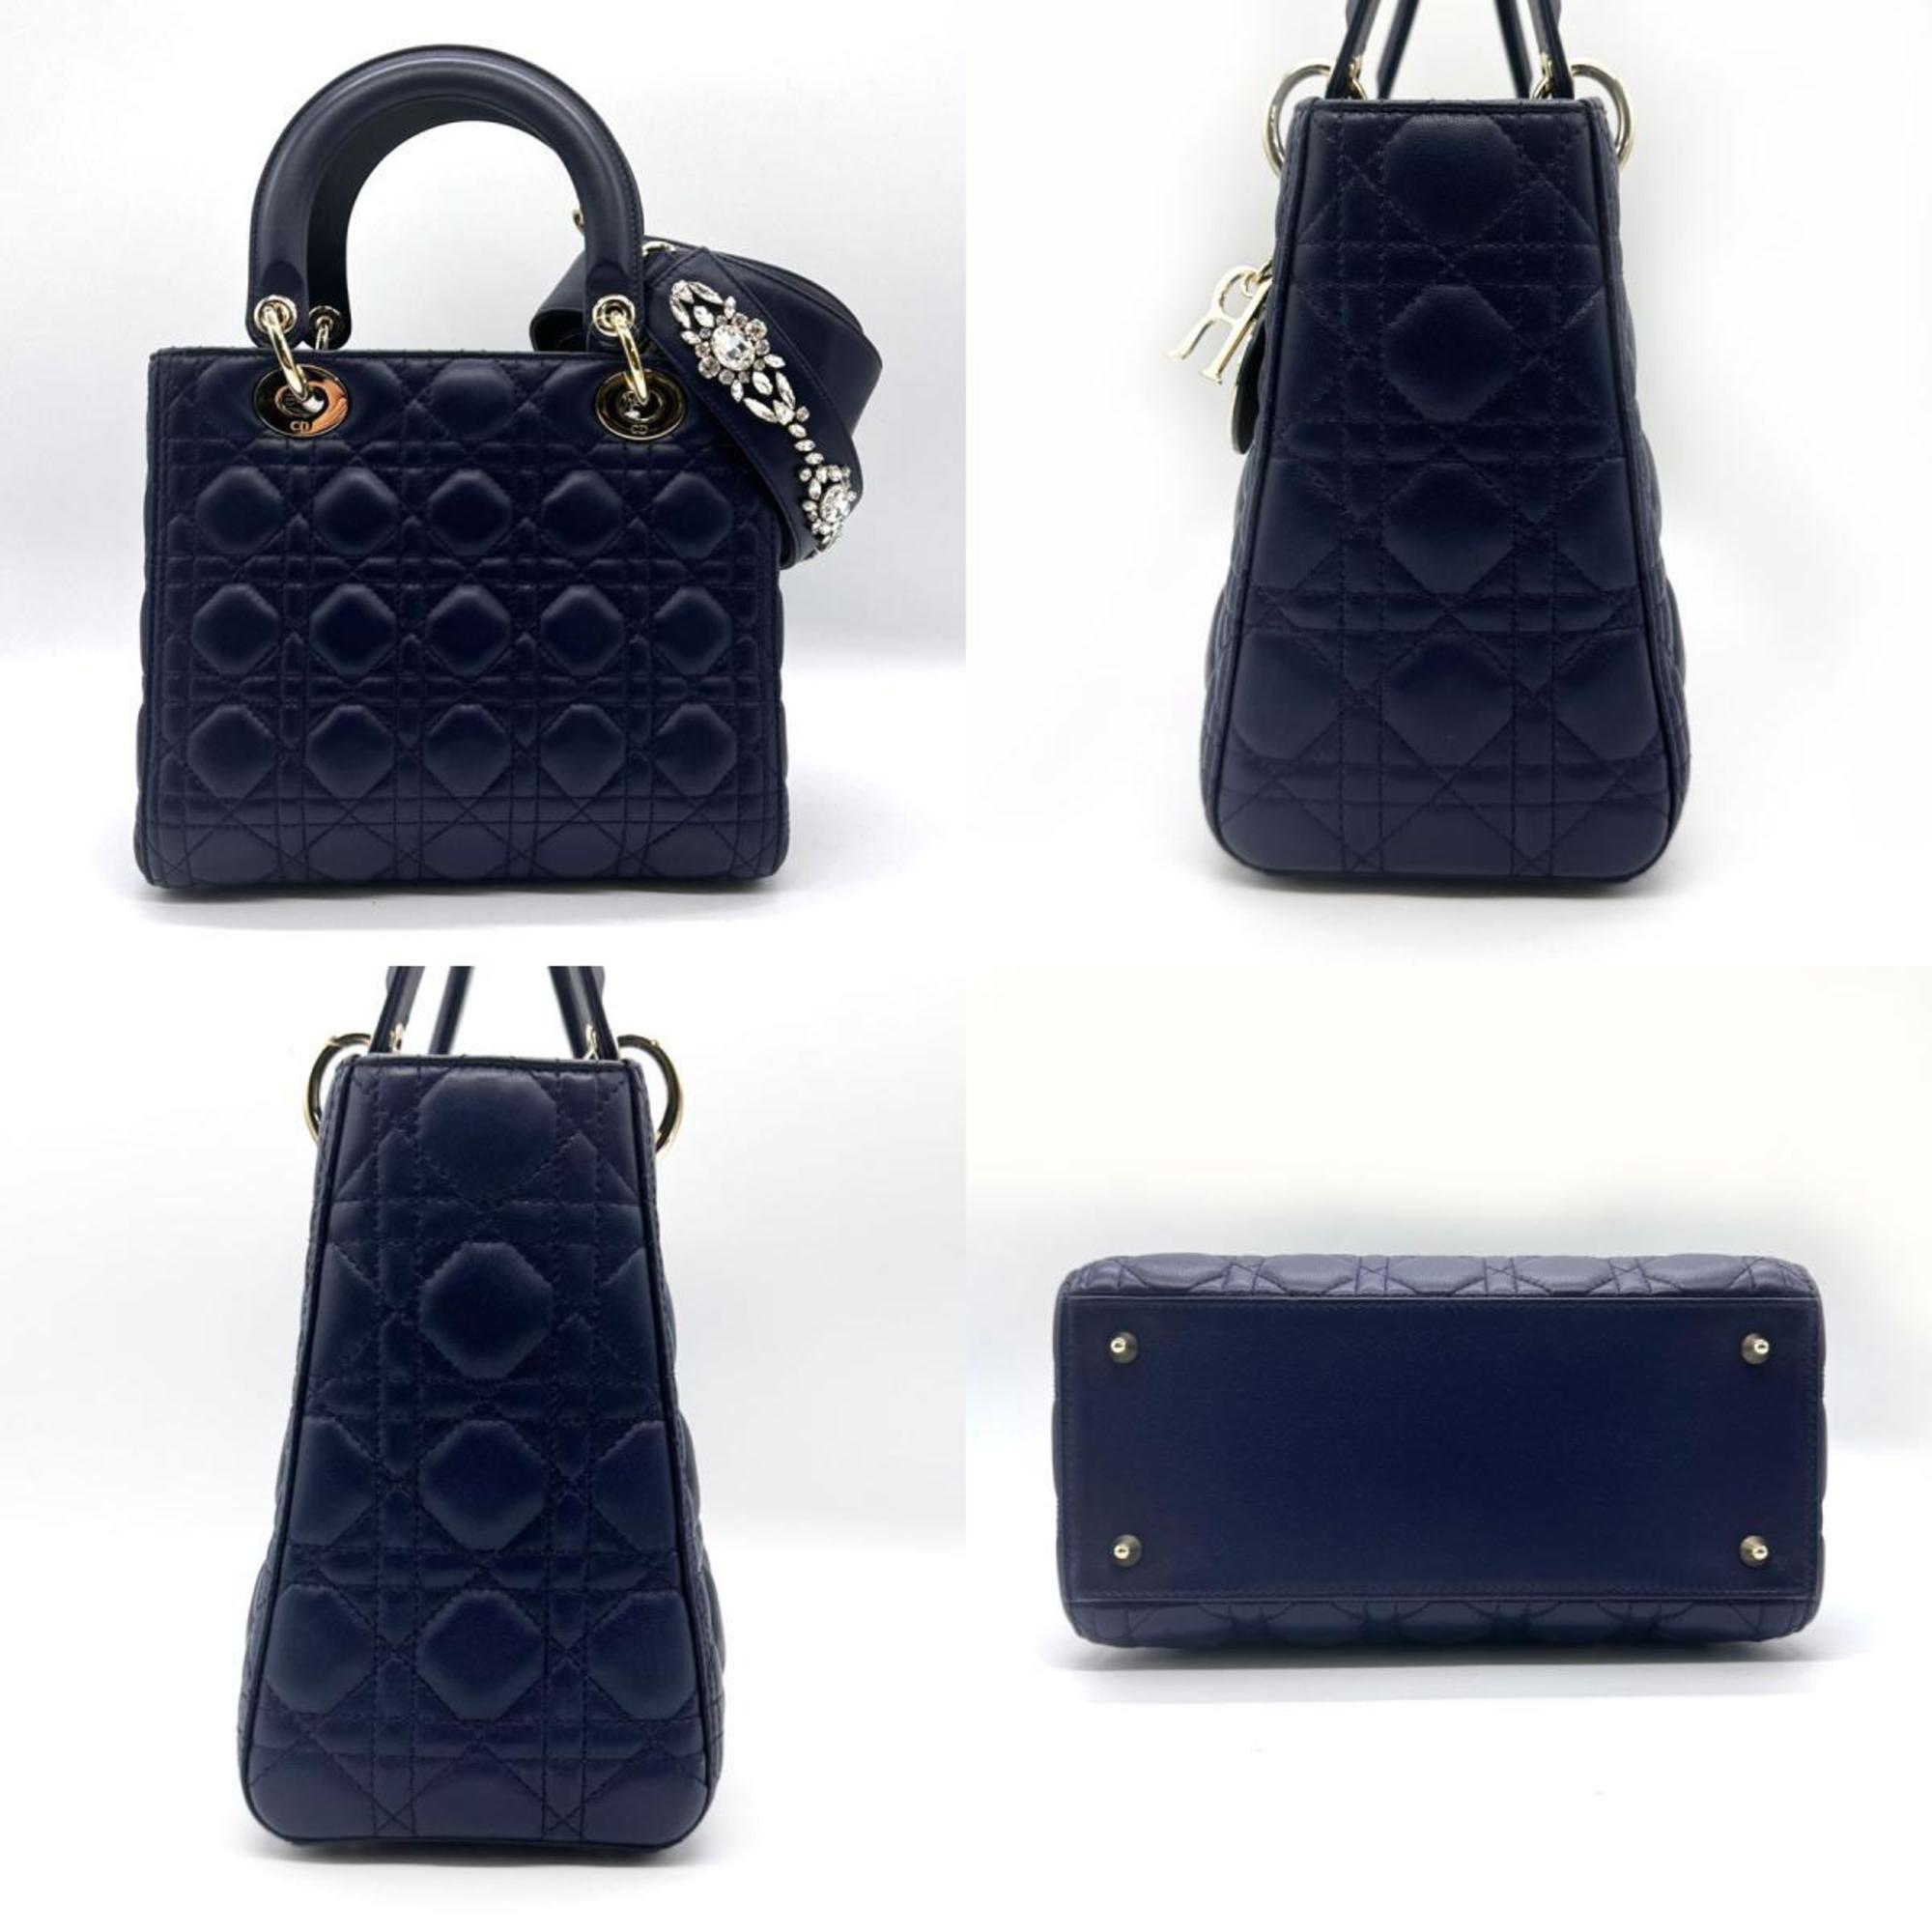 Christian Dior Handbag Shoulder Bag Lady Lambskin Navy Blue Gold Ladies